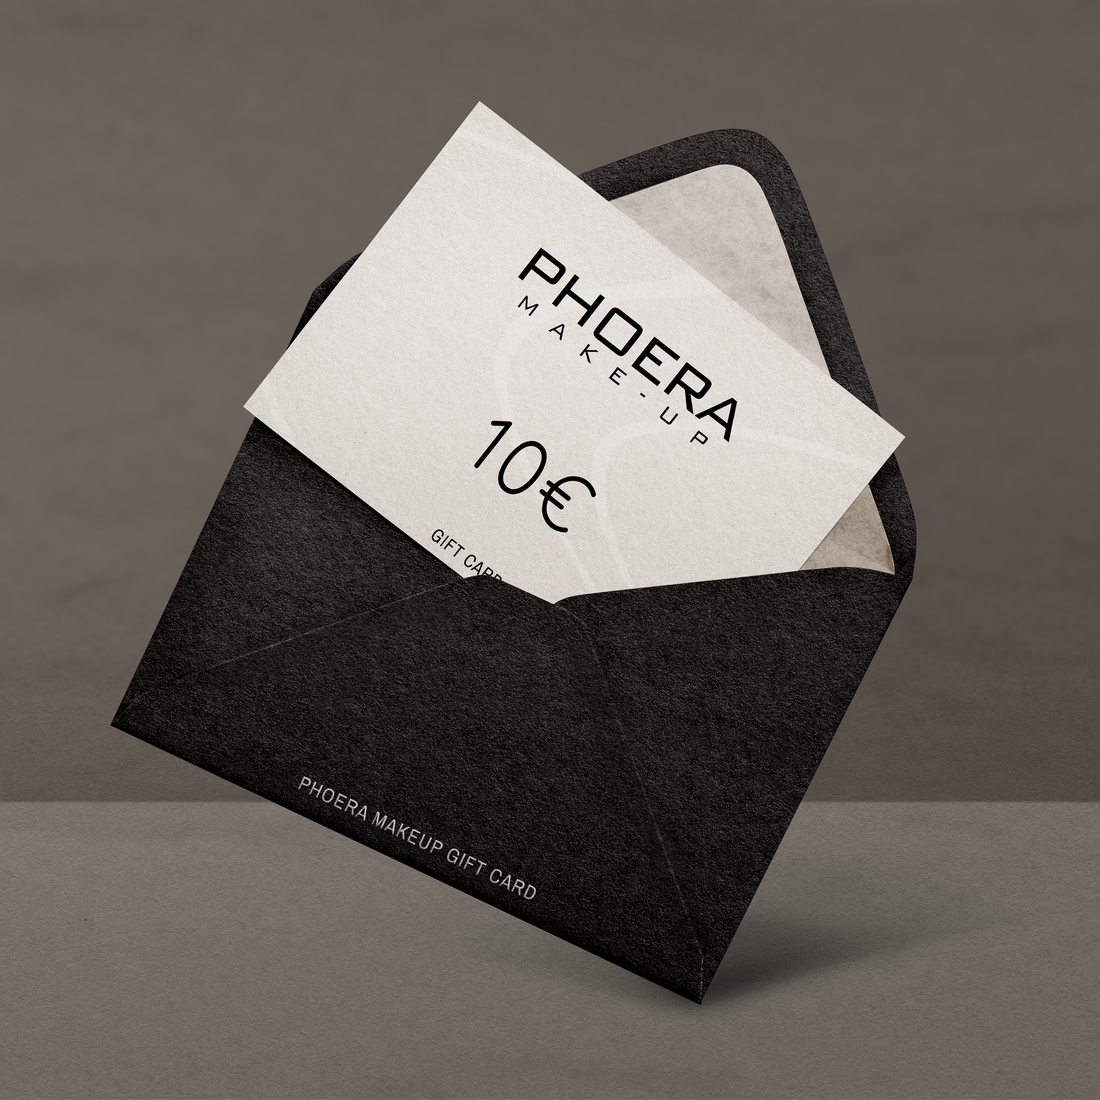 Phoera Makeup Gift Card - Phoera Makeup Europe